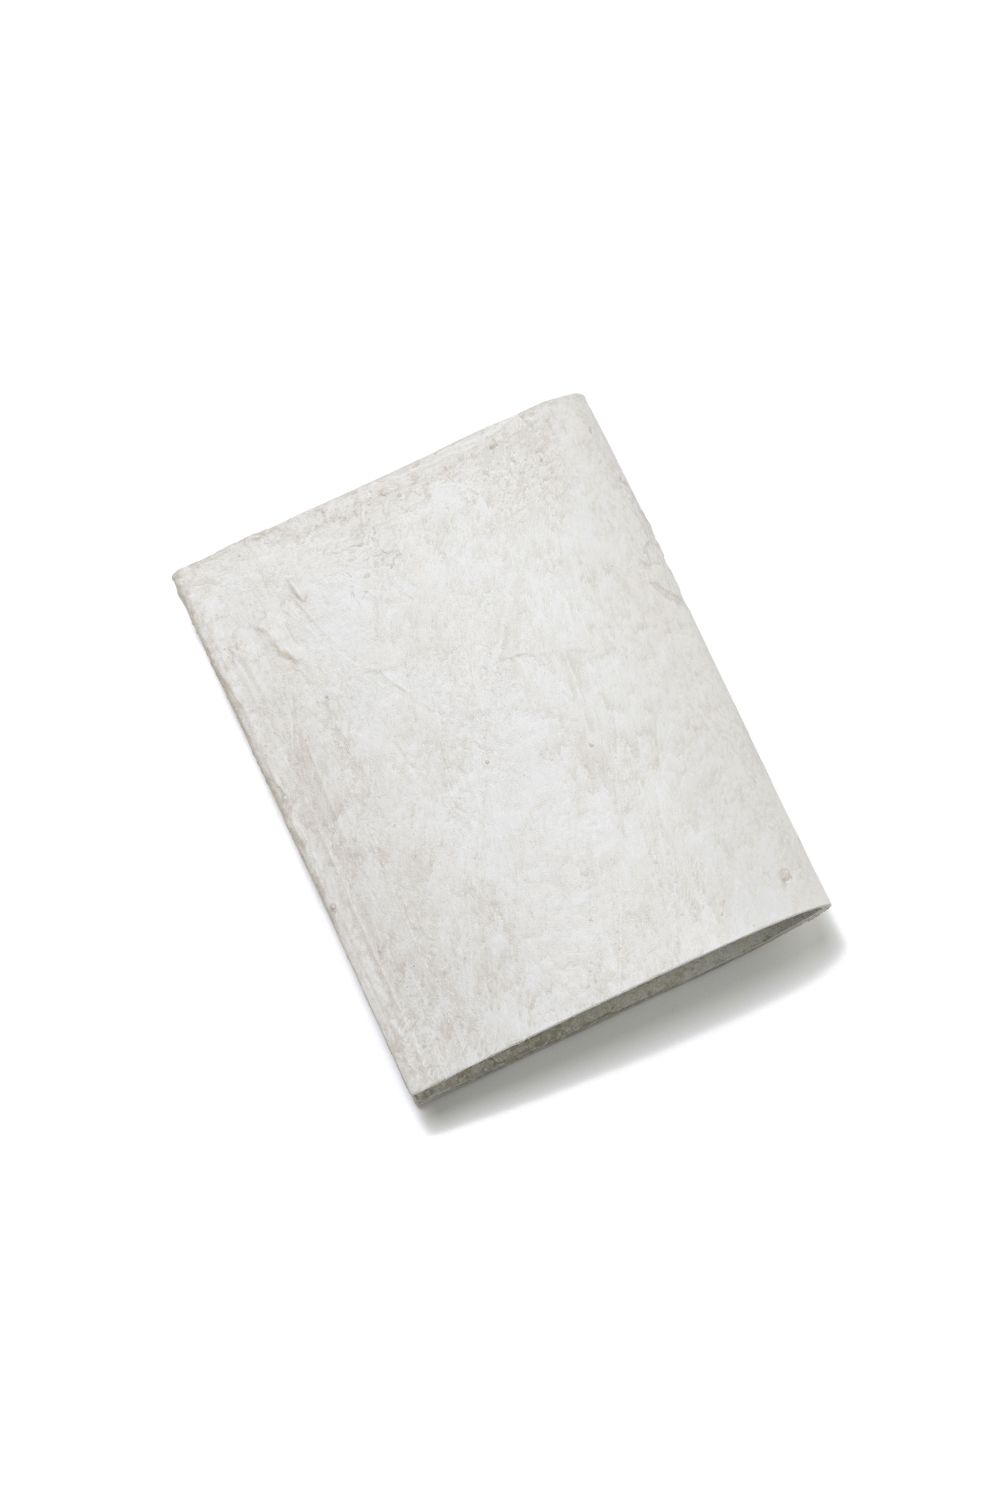 KAGARI YUSUKE - 二つ折り財布 [ホワイト] / mw20-wh | BONITA ONLINE 